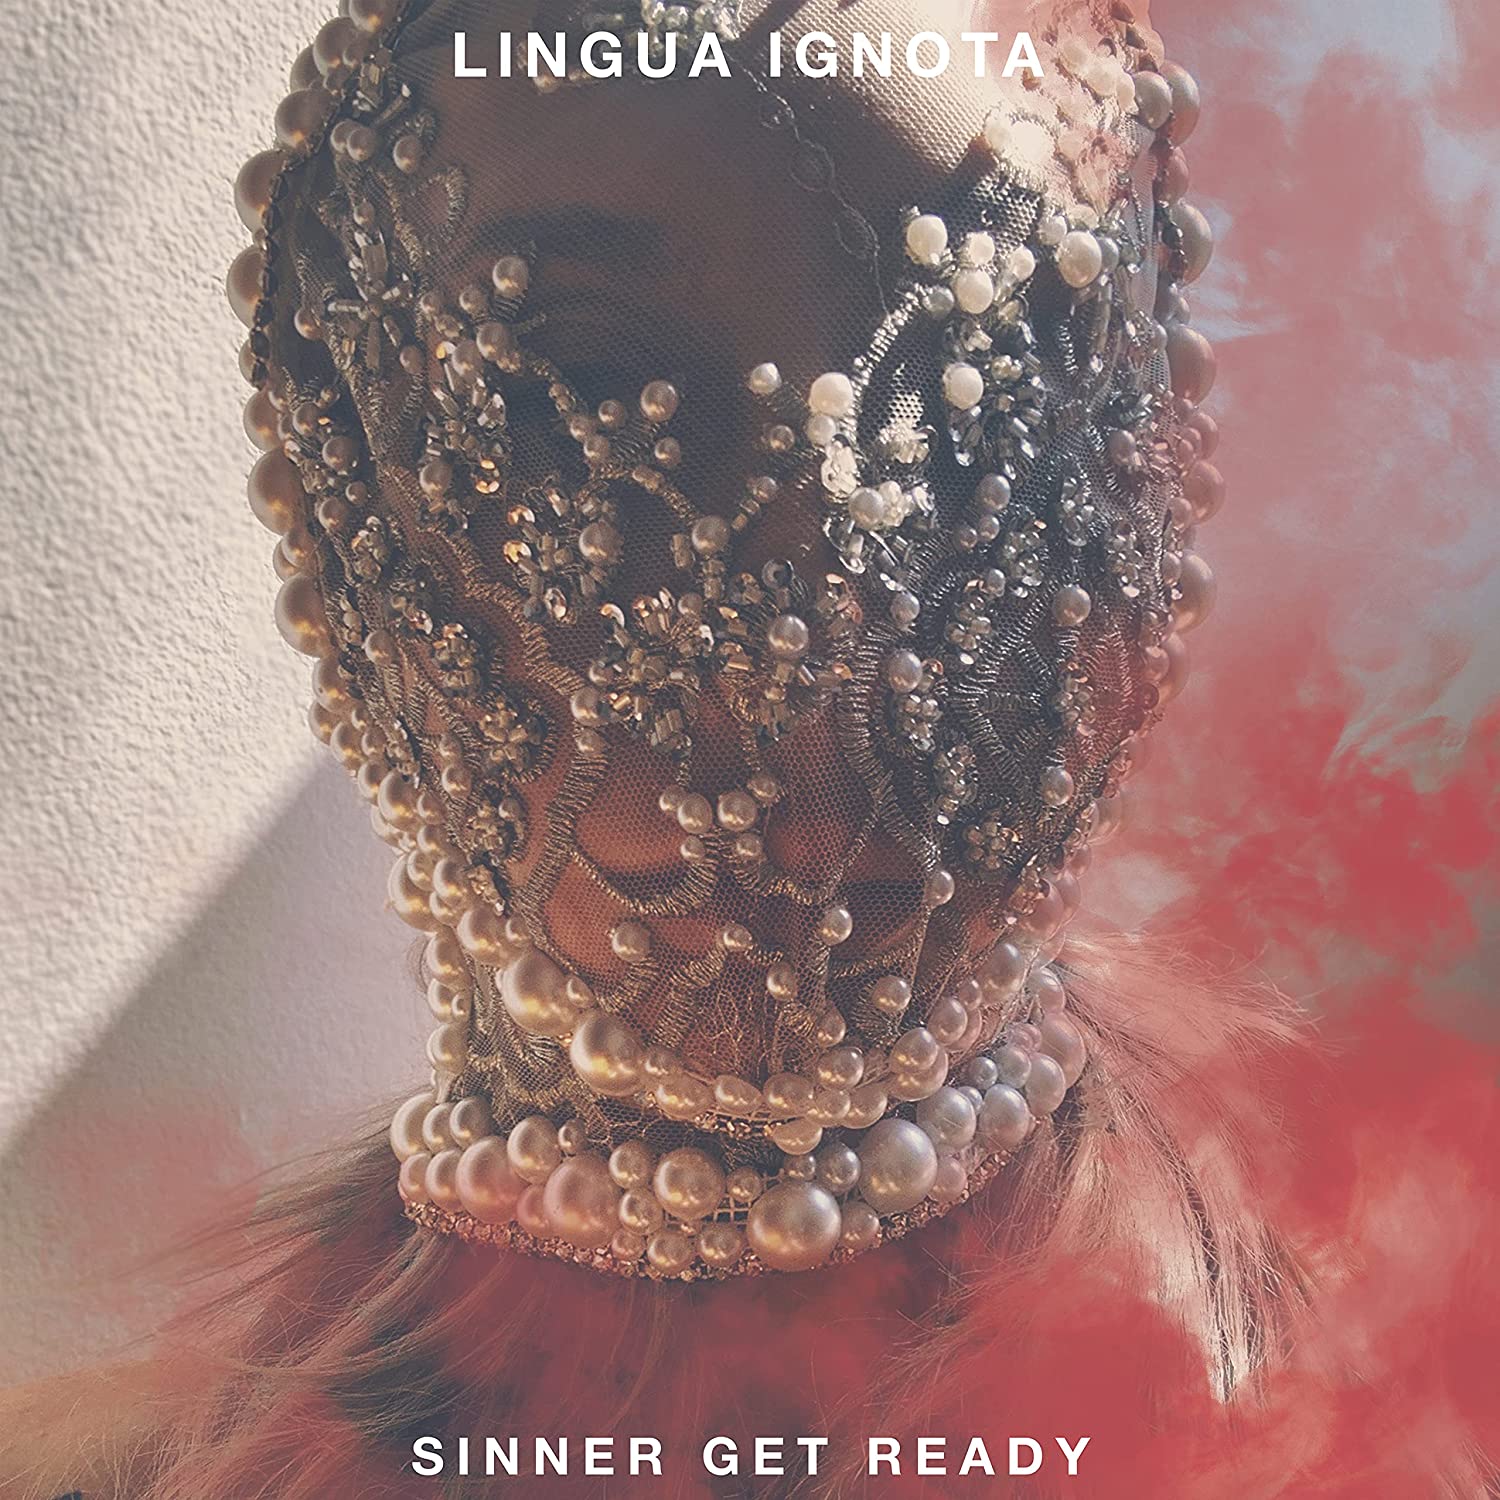 lingua-ignota-sinner-get-ready.jpg